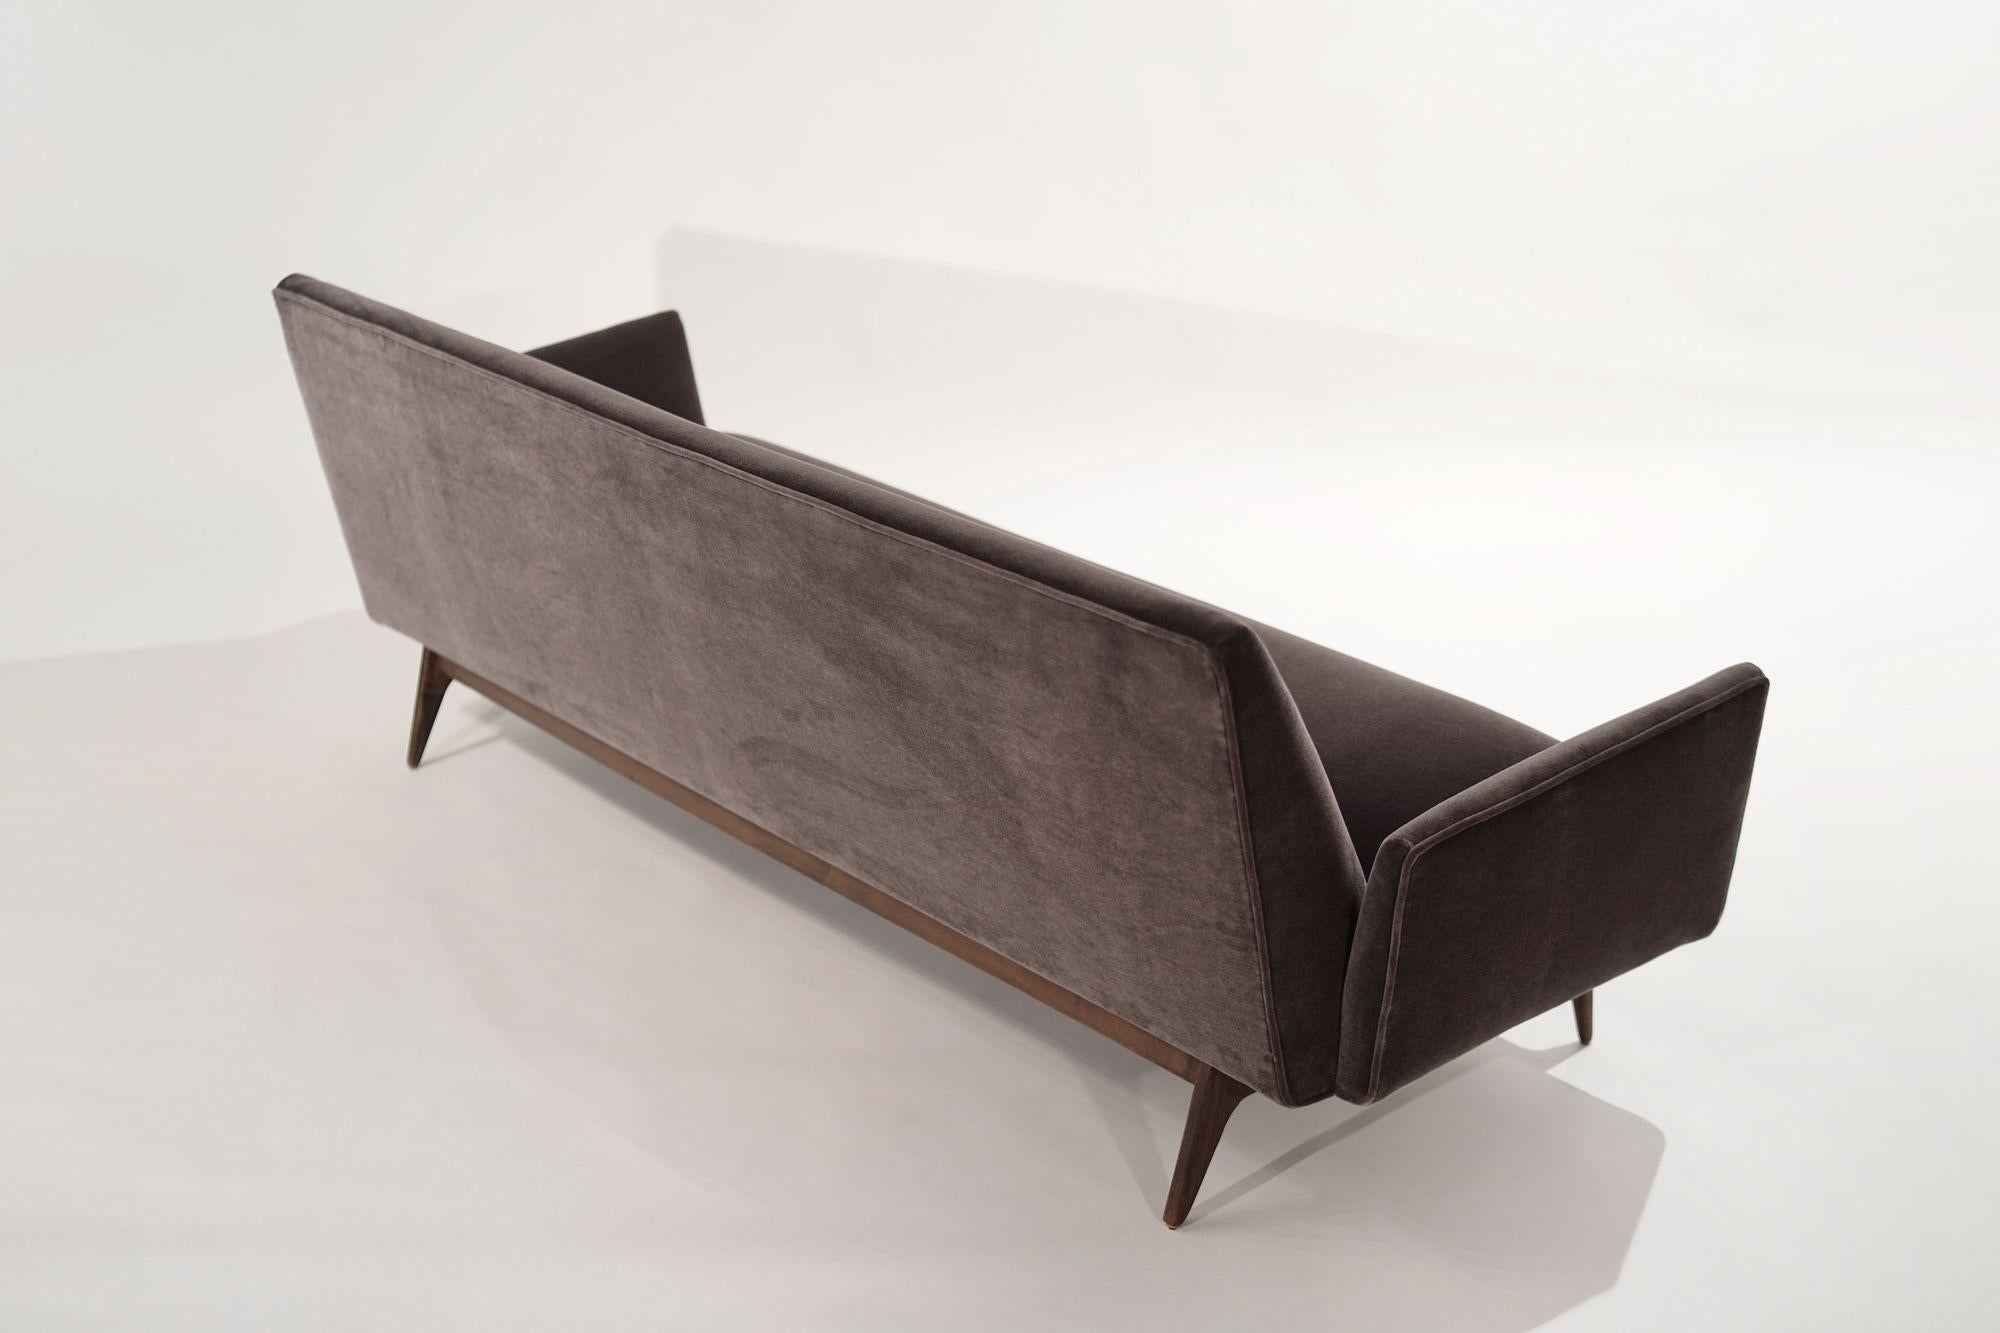 20th Century Brass-Accented Scandinavian Modern Sofa in Mohair, C. 1950s